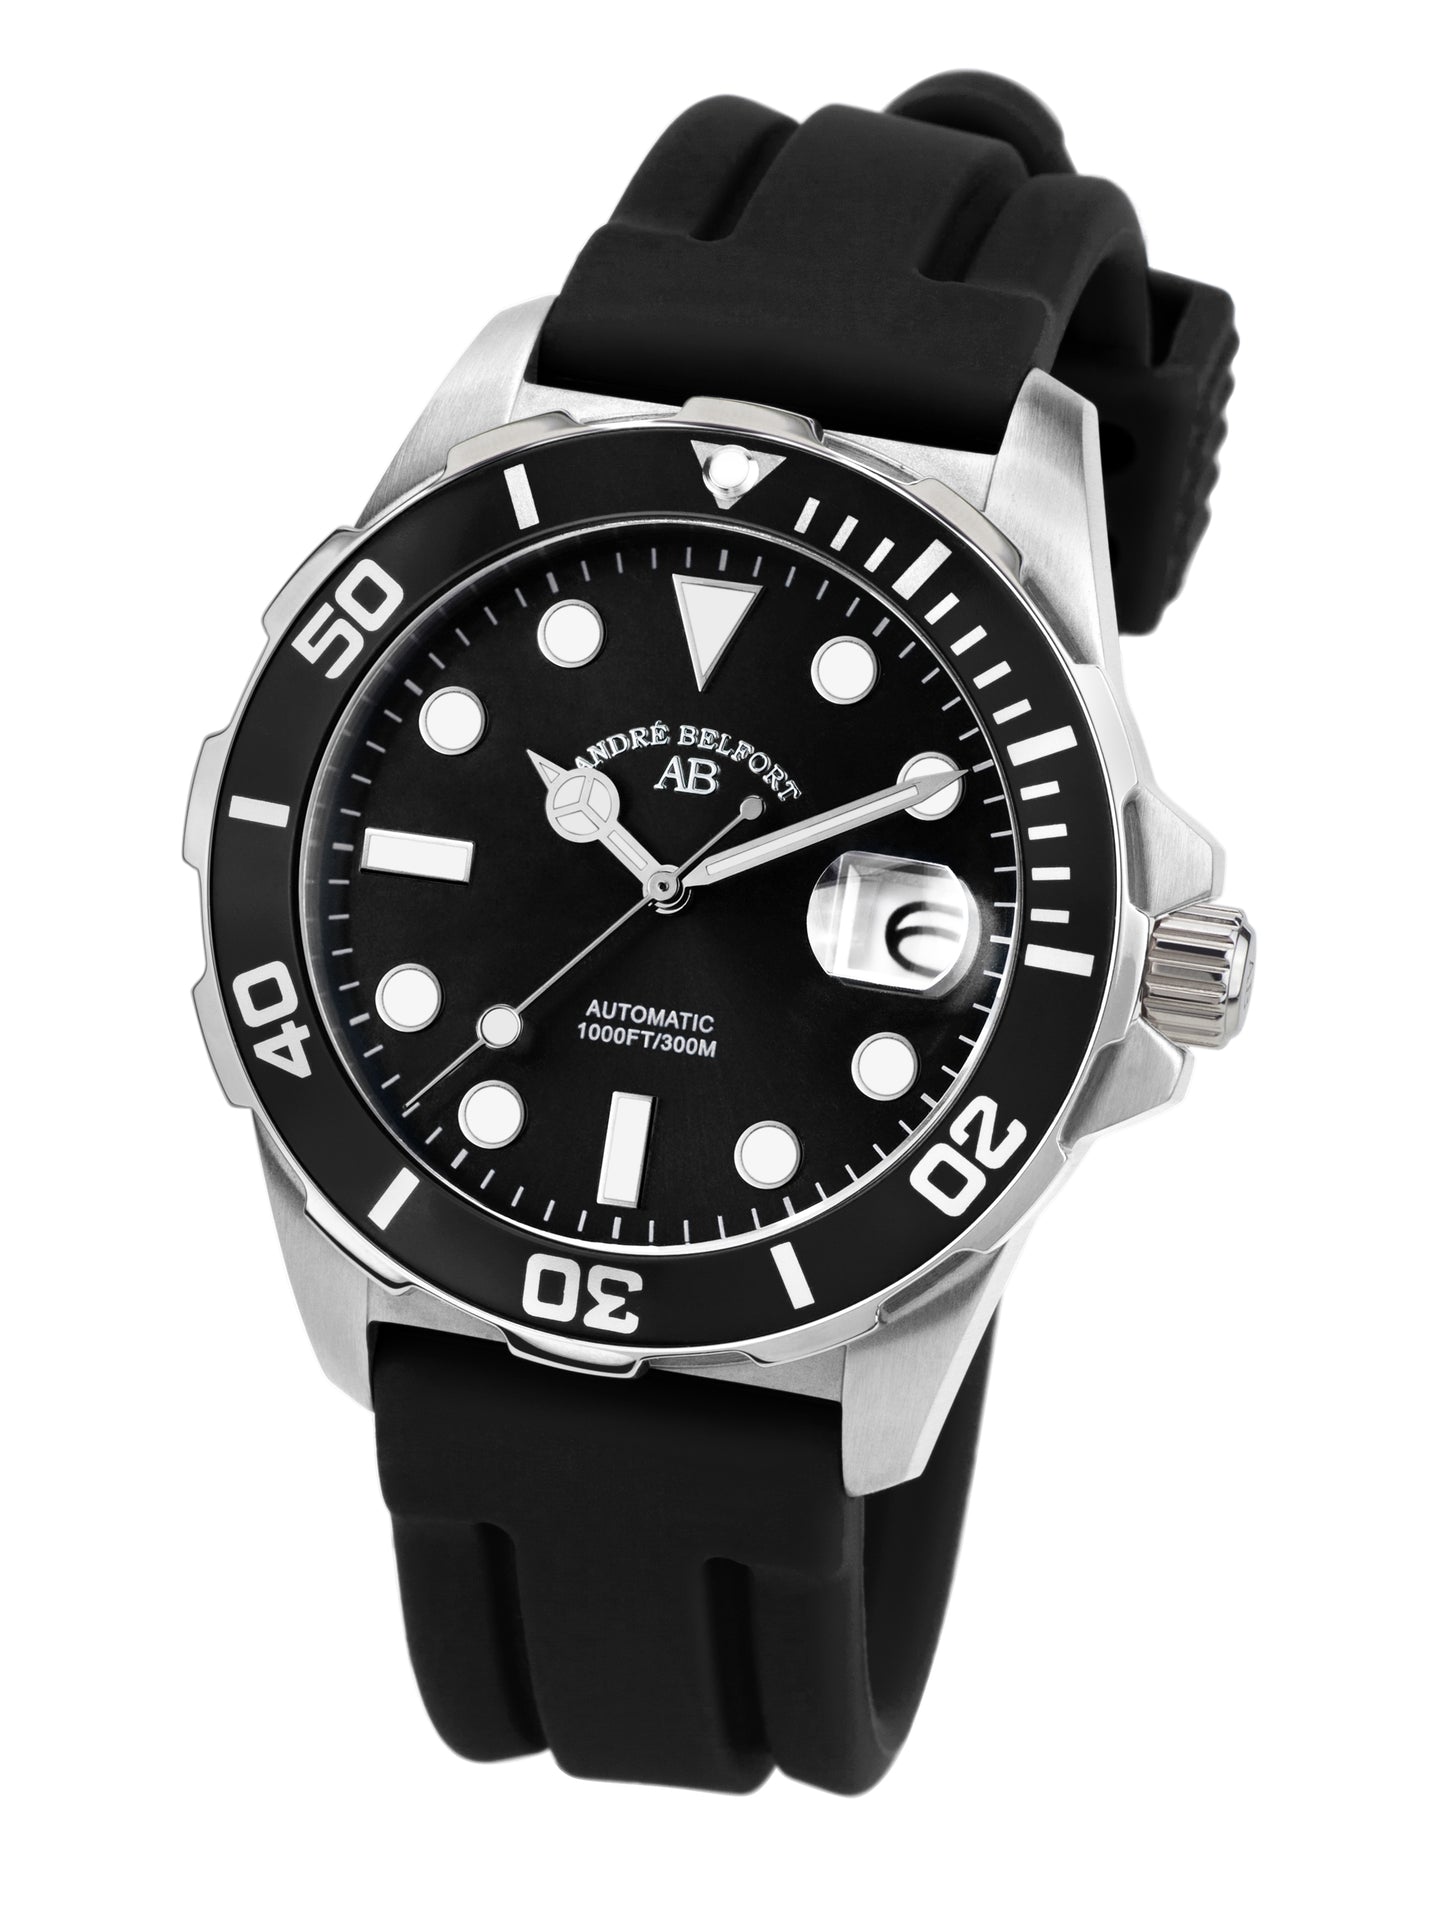 Automatic watches — Sous les mers — André Belfort — black